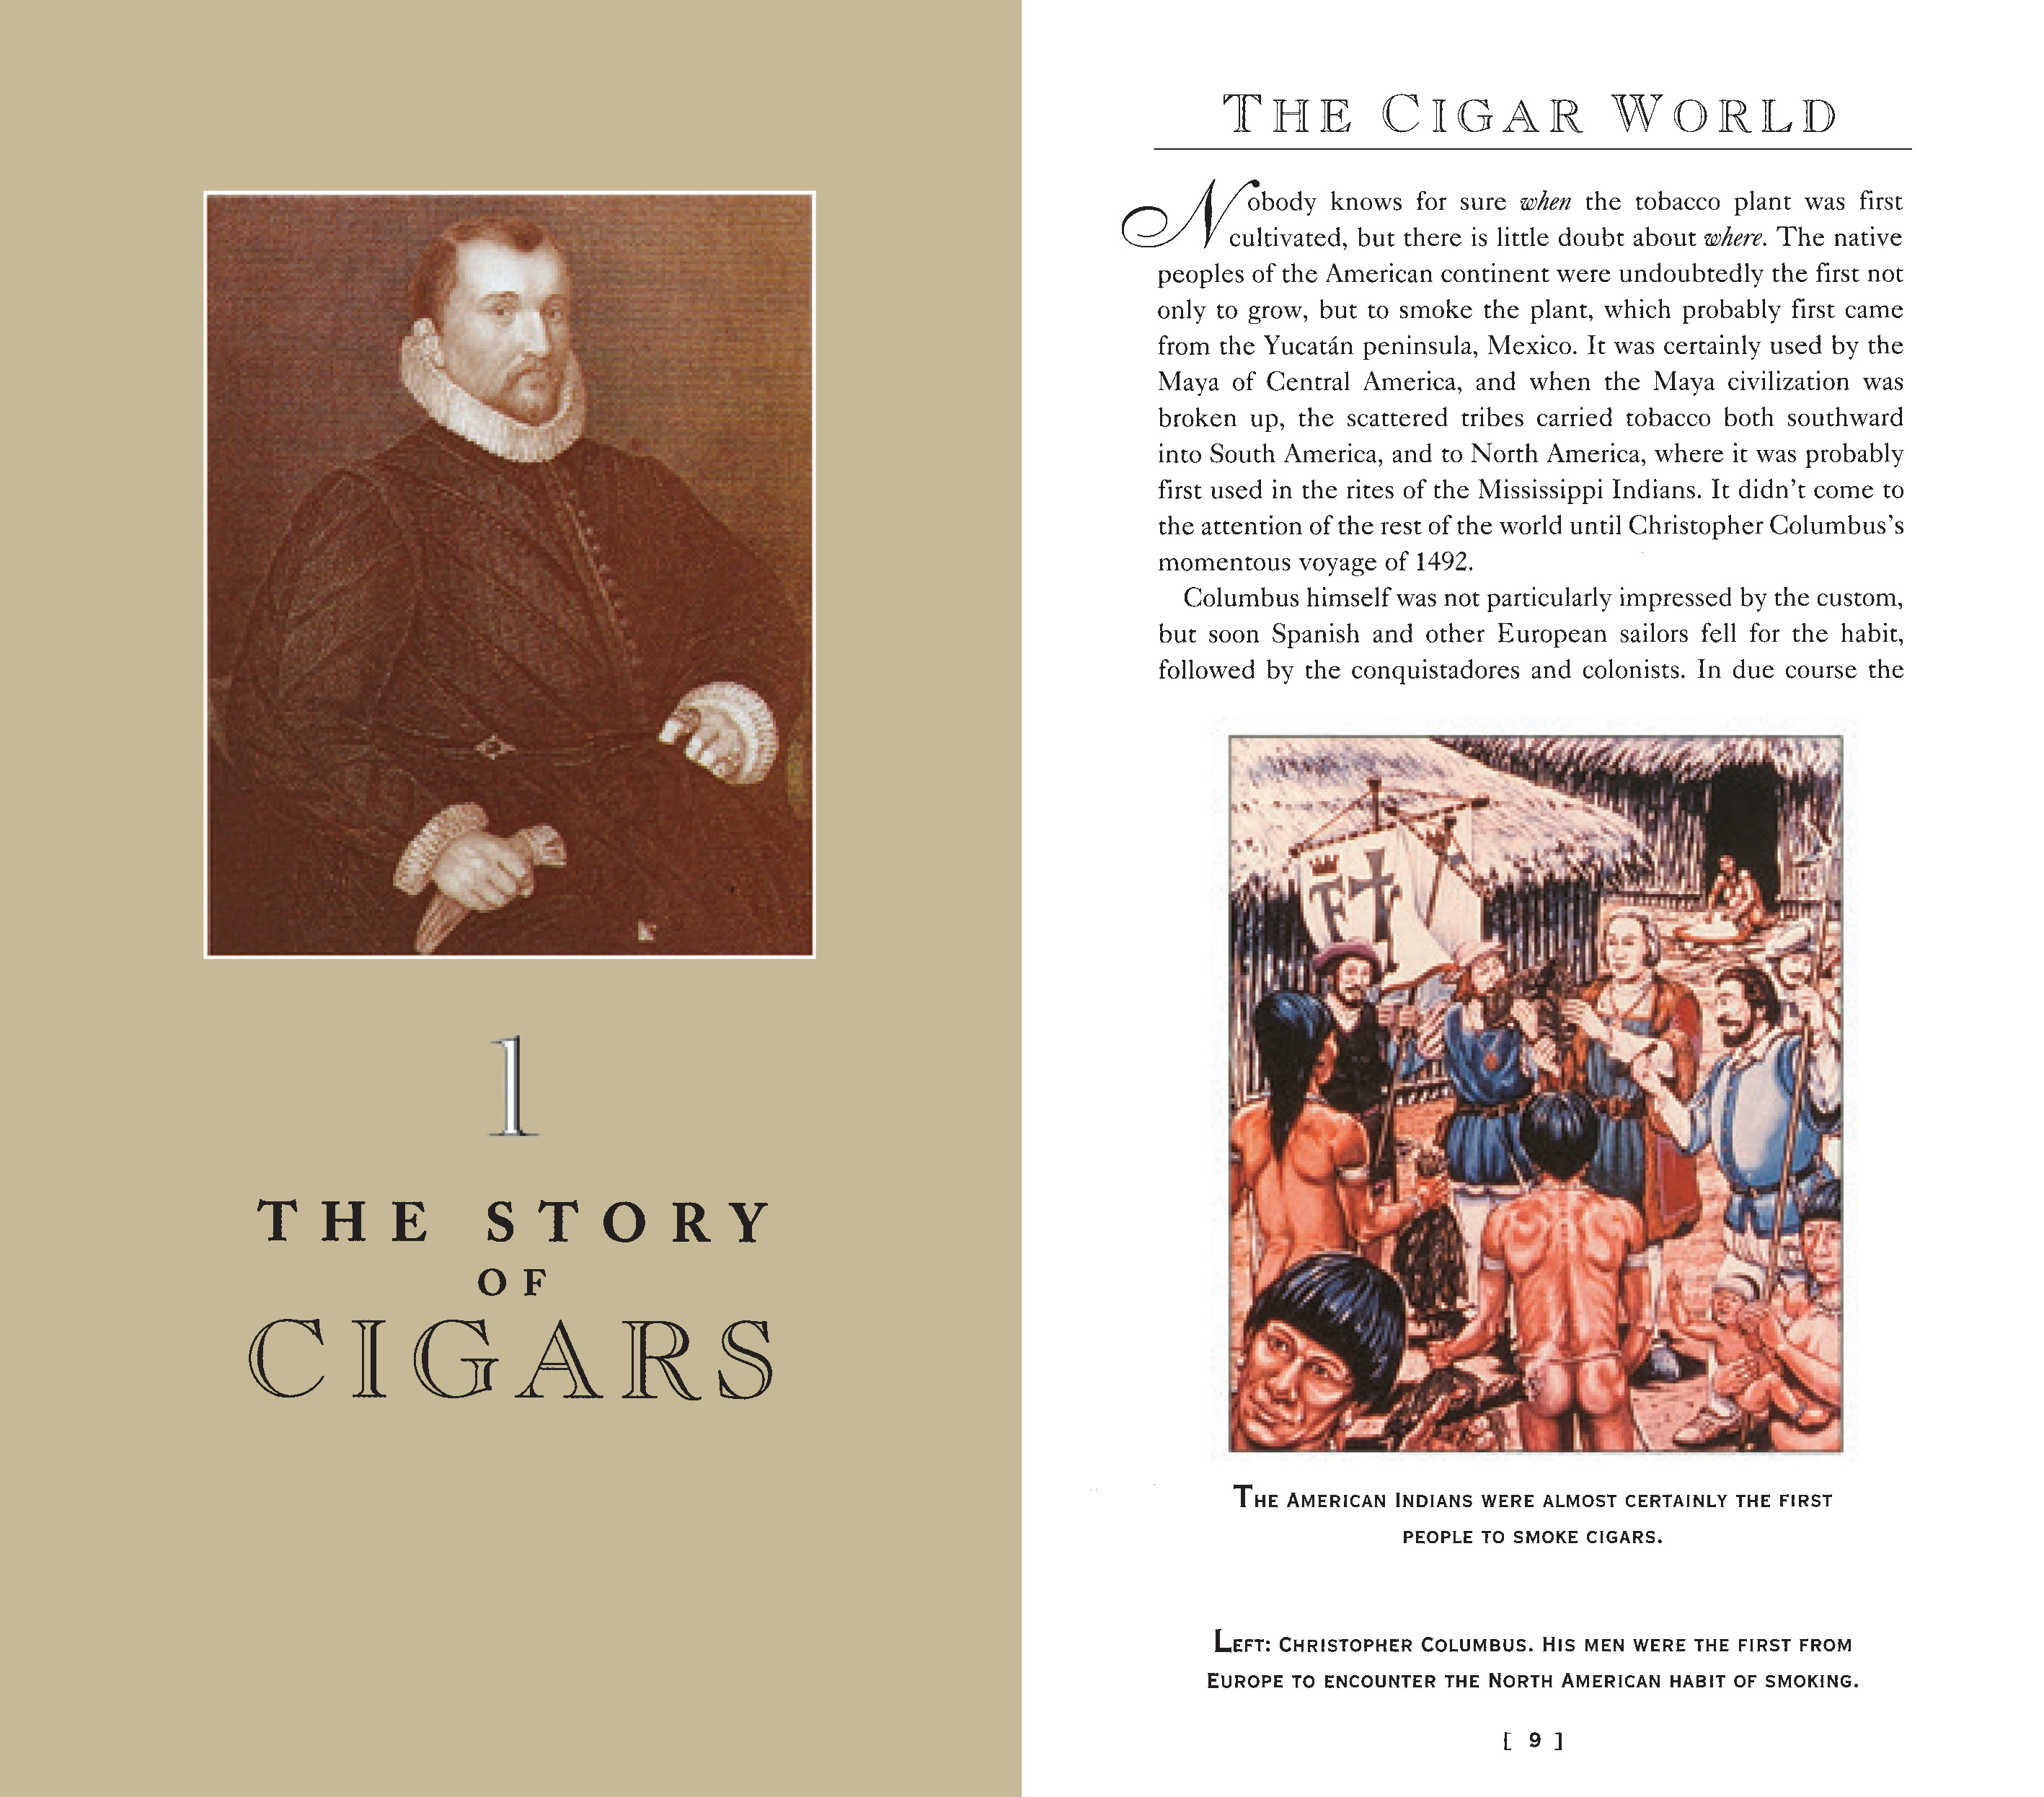 The Cigar Companion: Third Edition